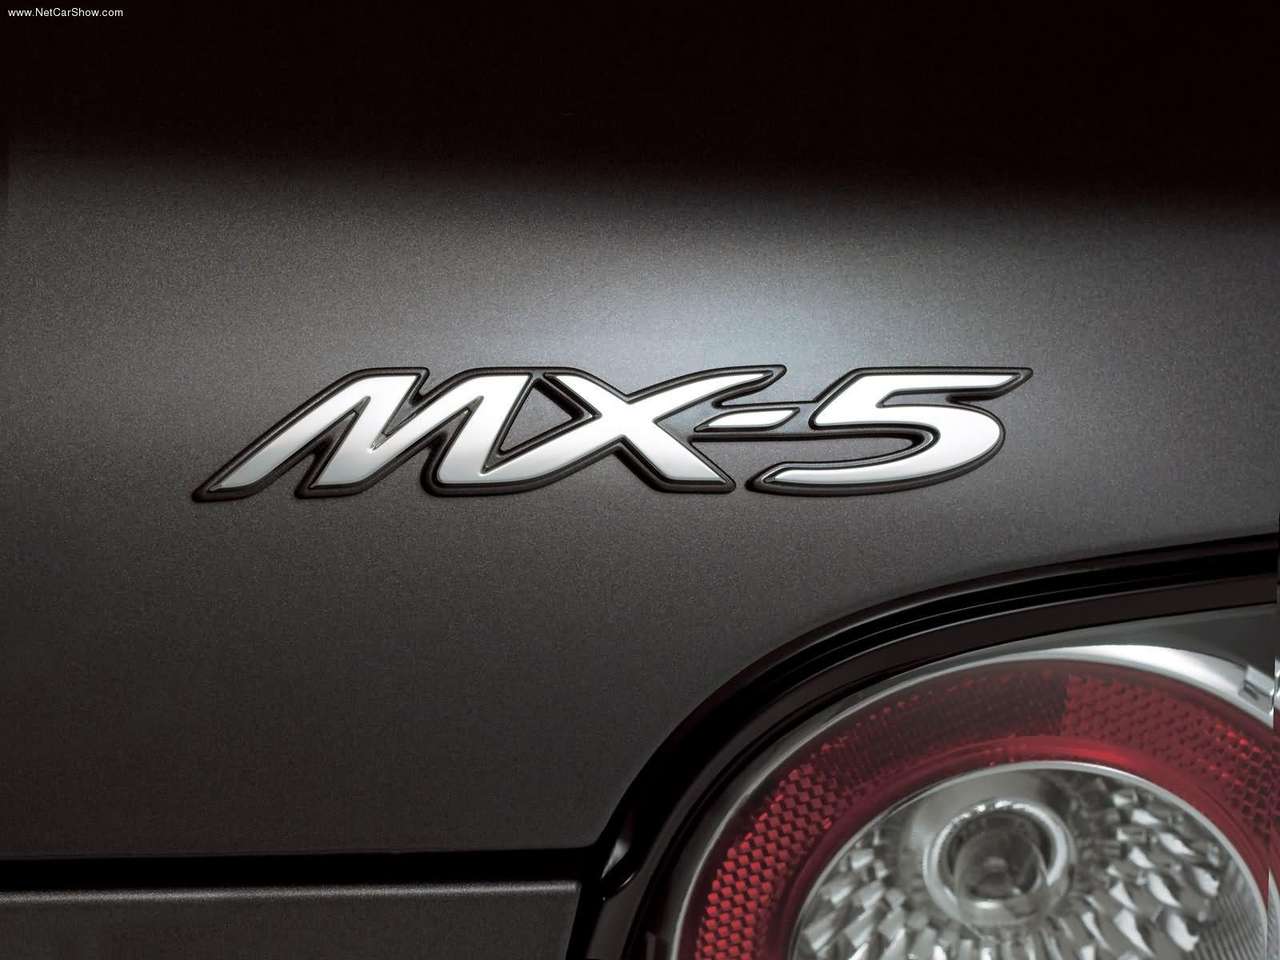 Mazda MX-5, Mazda, MX-5, MX5, Miata, roadster, convertible, sports car, JDM, Japanese car, classic car, retro car, ebay, ebay motors, autotrader, car, cars, motoring, automotive, featured, not2grand, www.not2grand.co.uk,